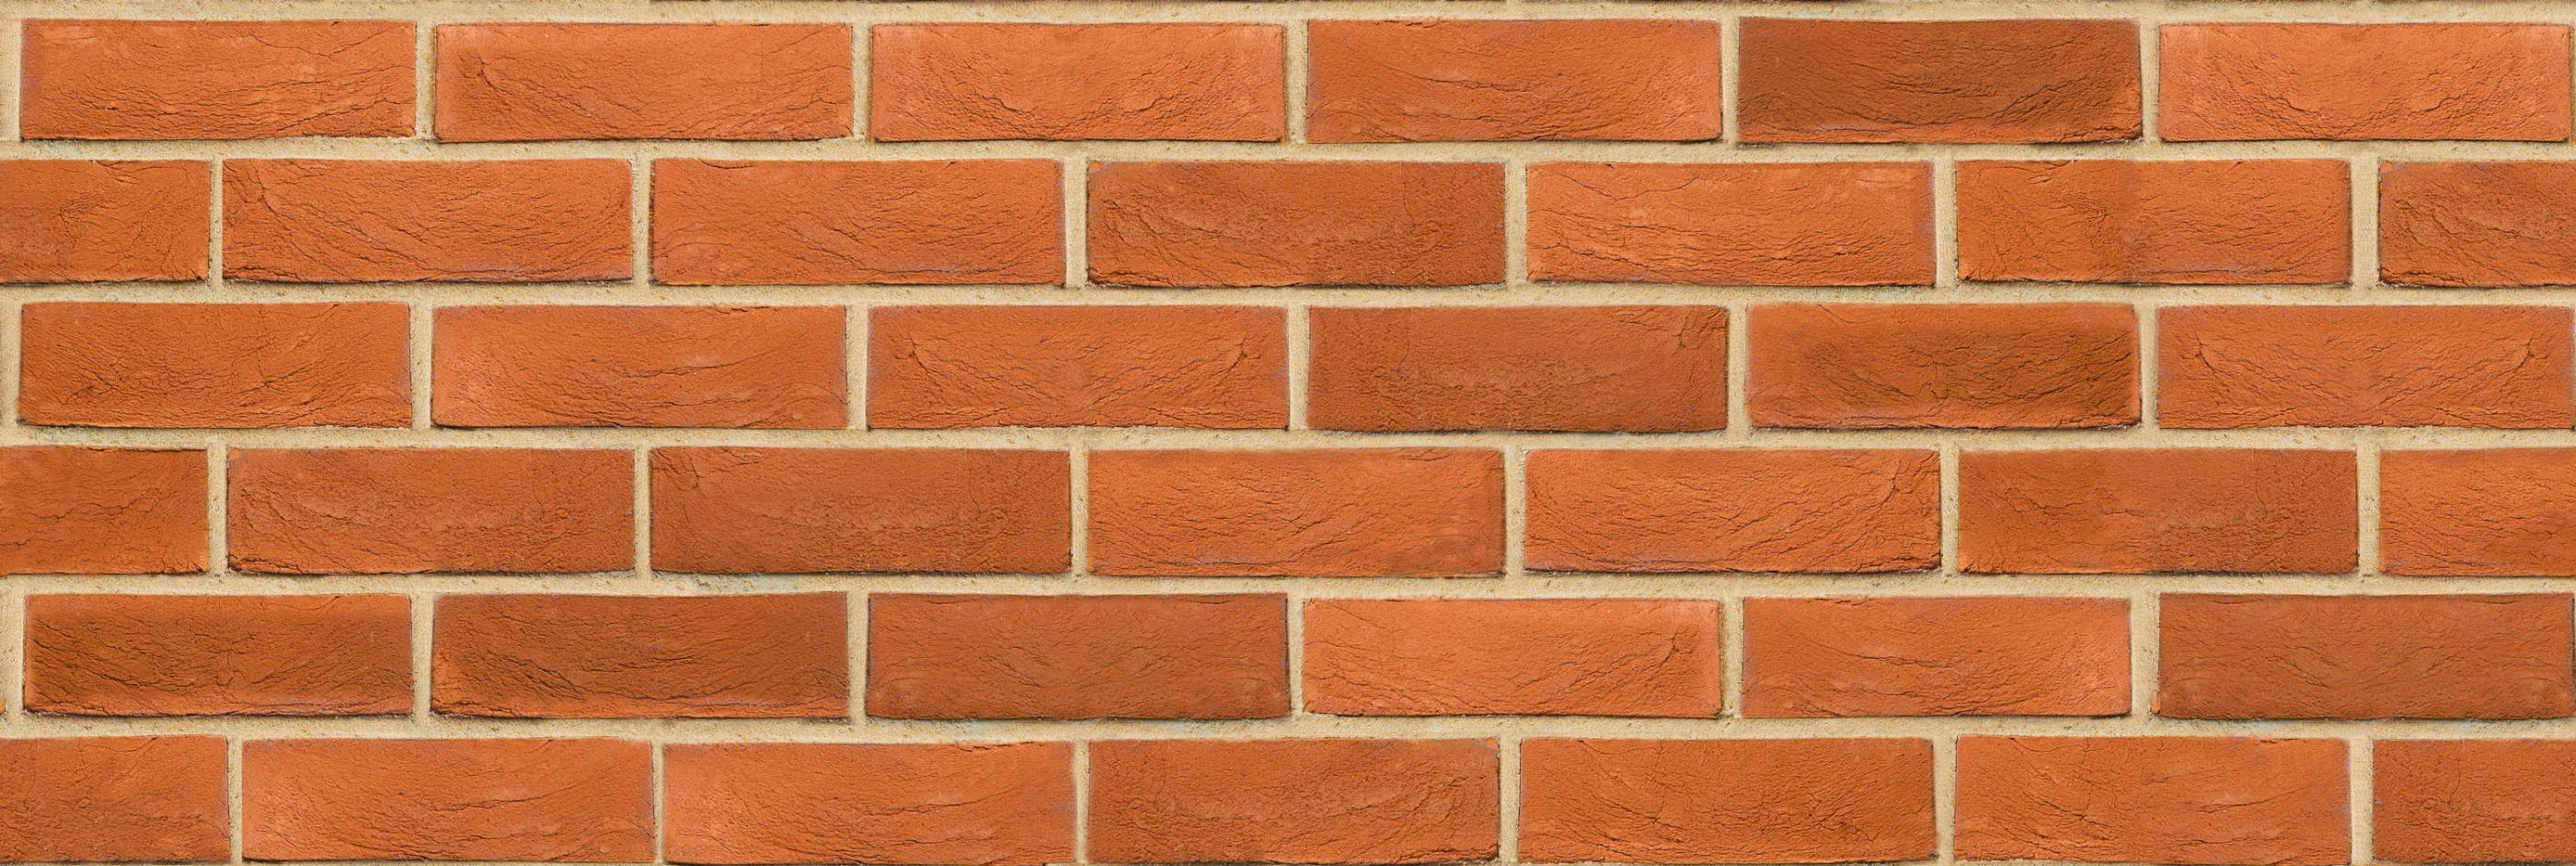 Charnwood Hampshire Red Clay Brick